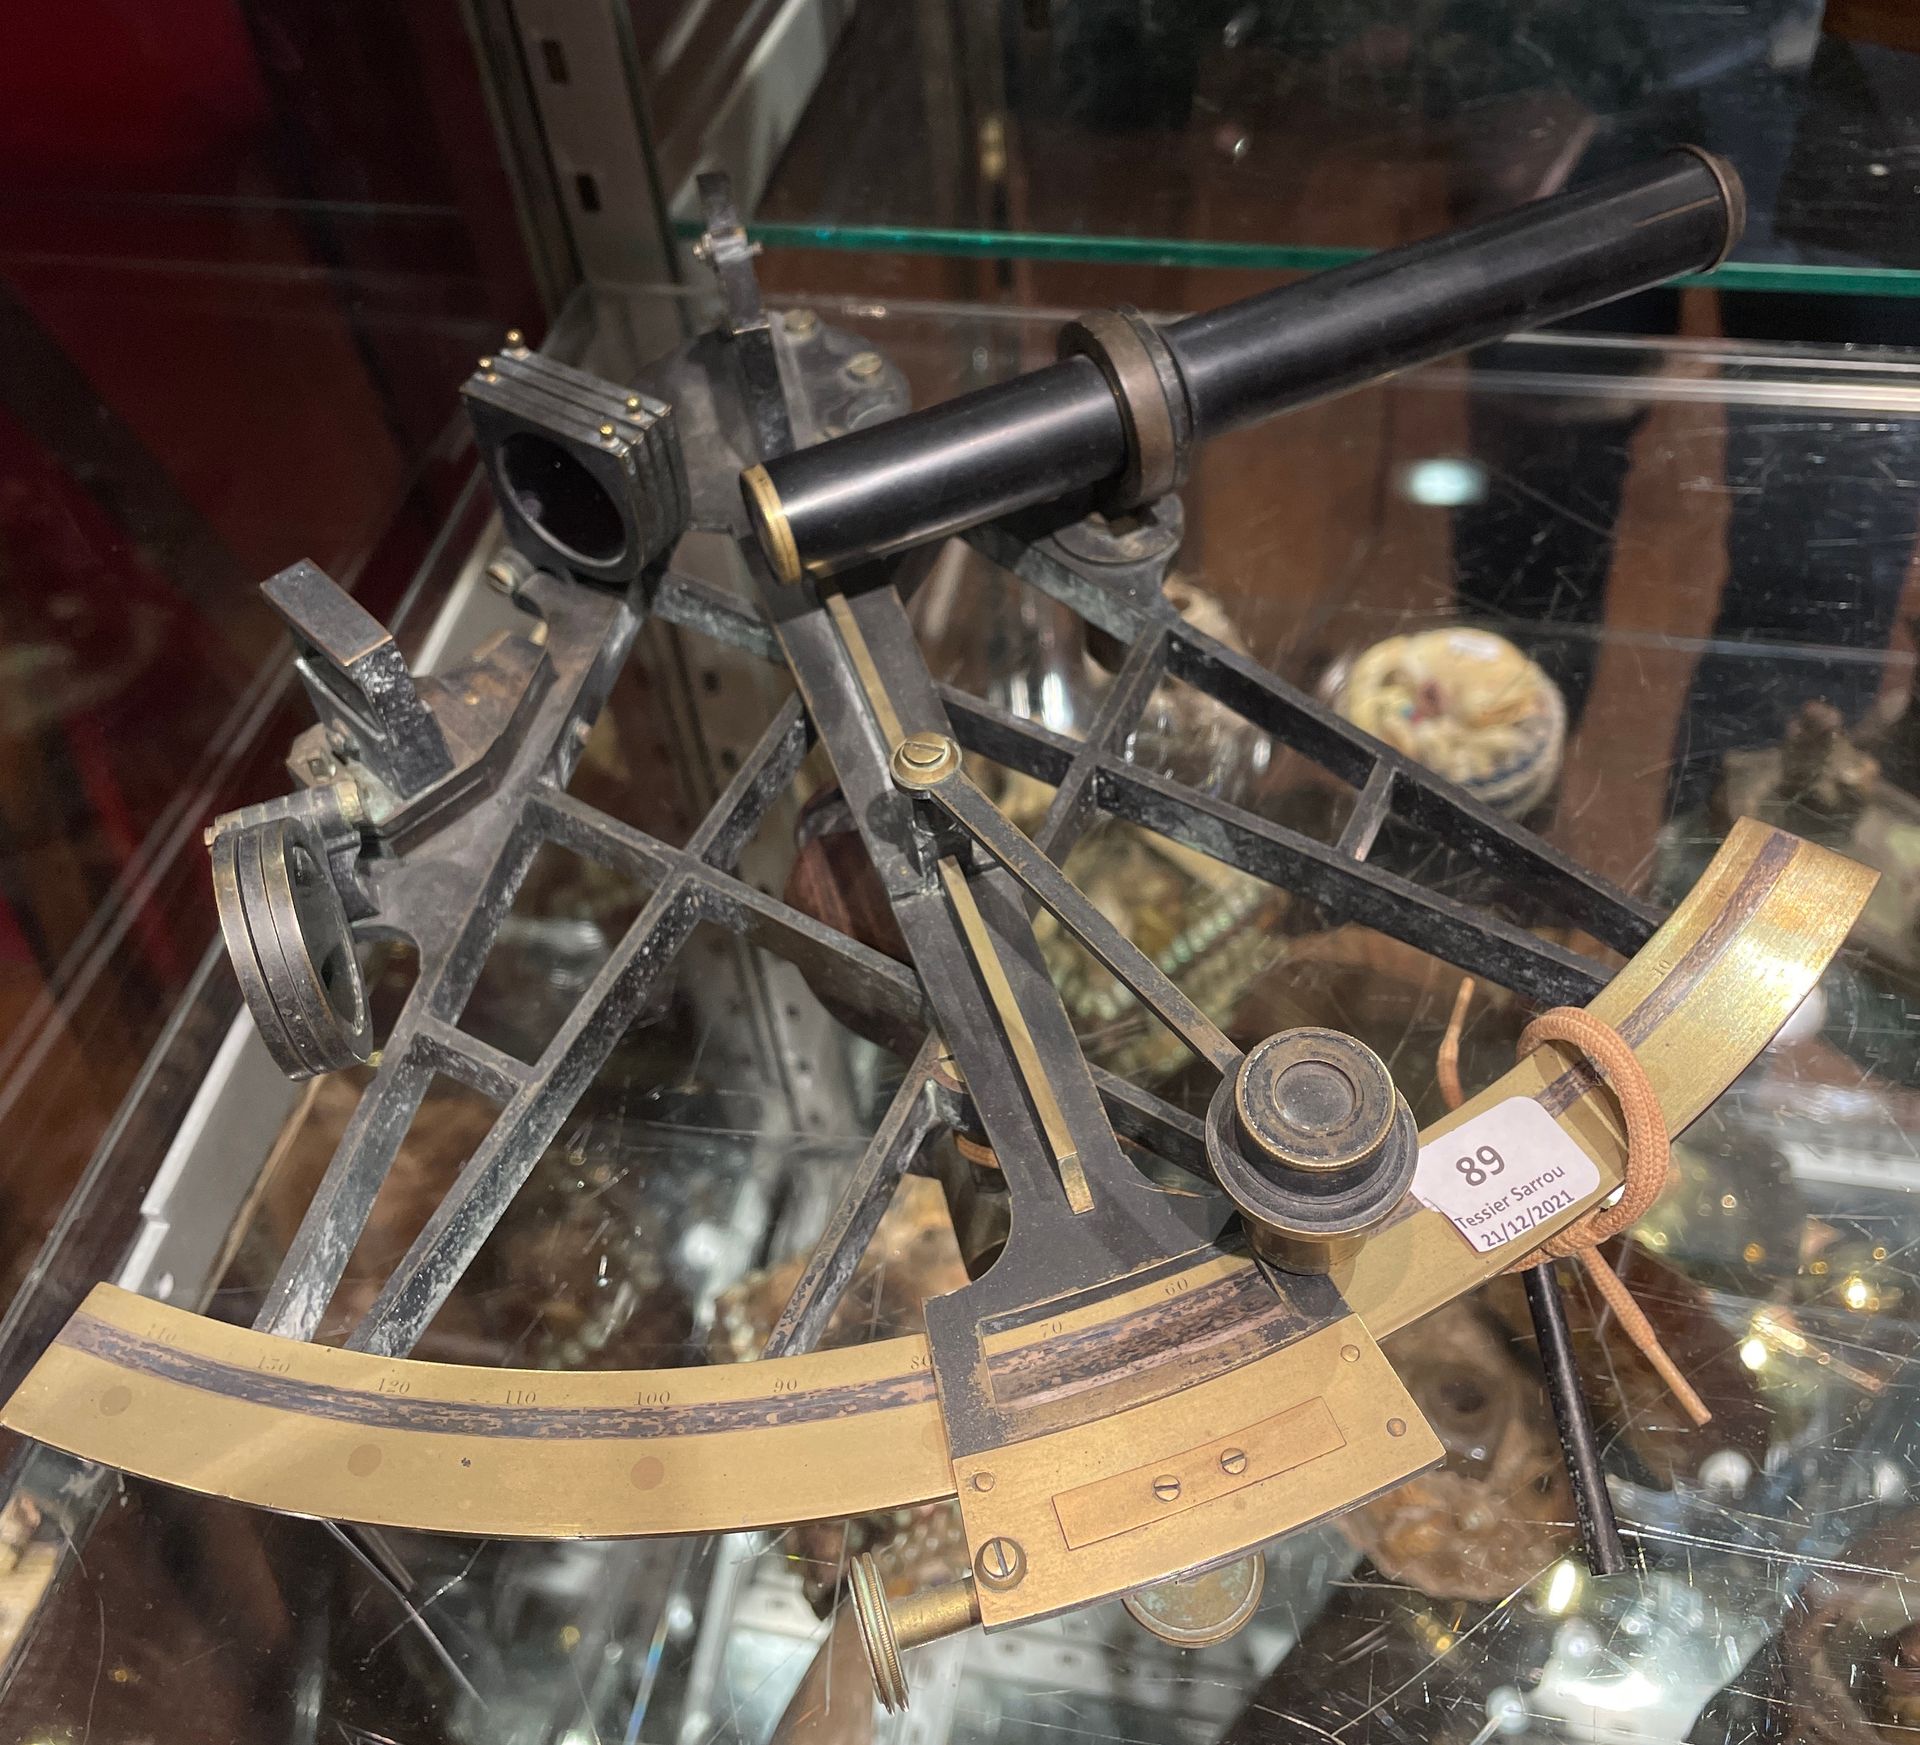 Null 青铜和黄铜六分仪，肢体和游标分在镀银上
，与其导线和光学元件一起完整。不带盒子。
英国，19世纪